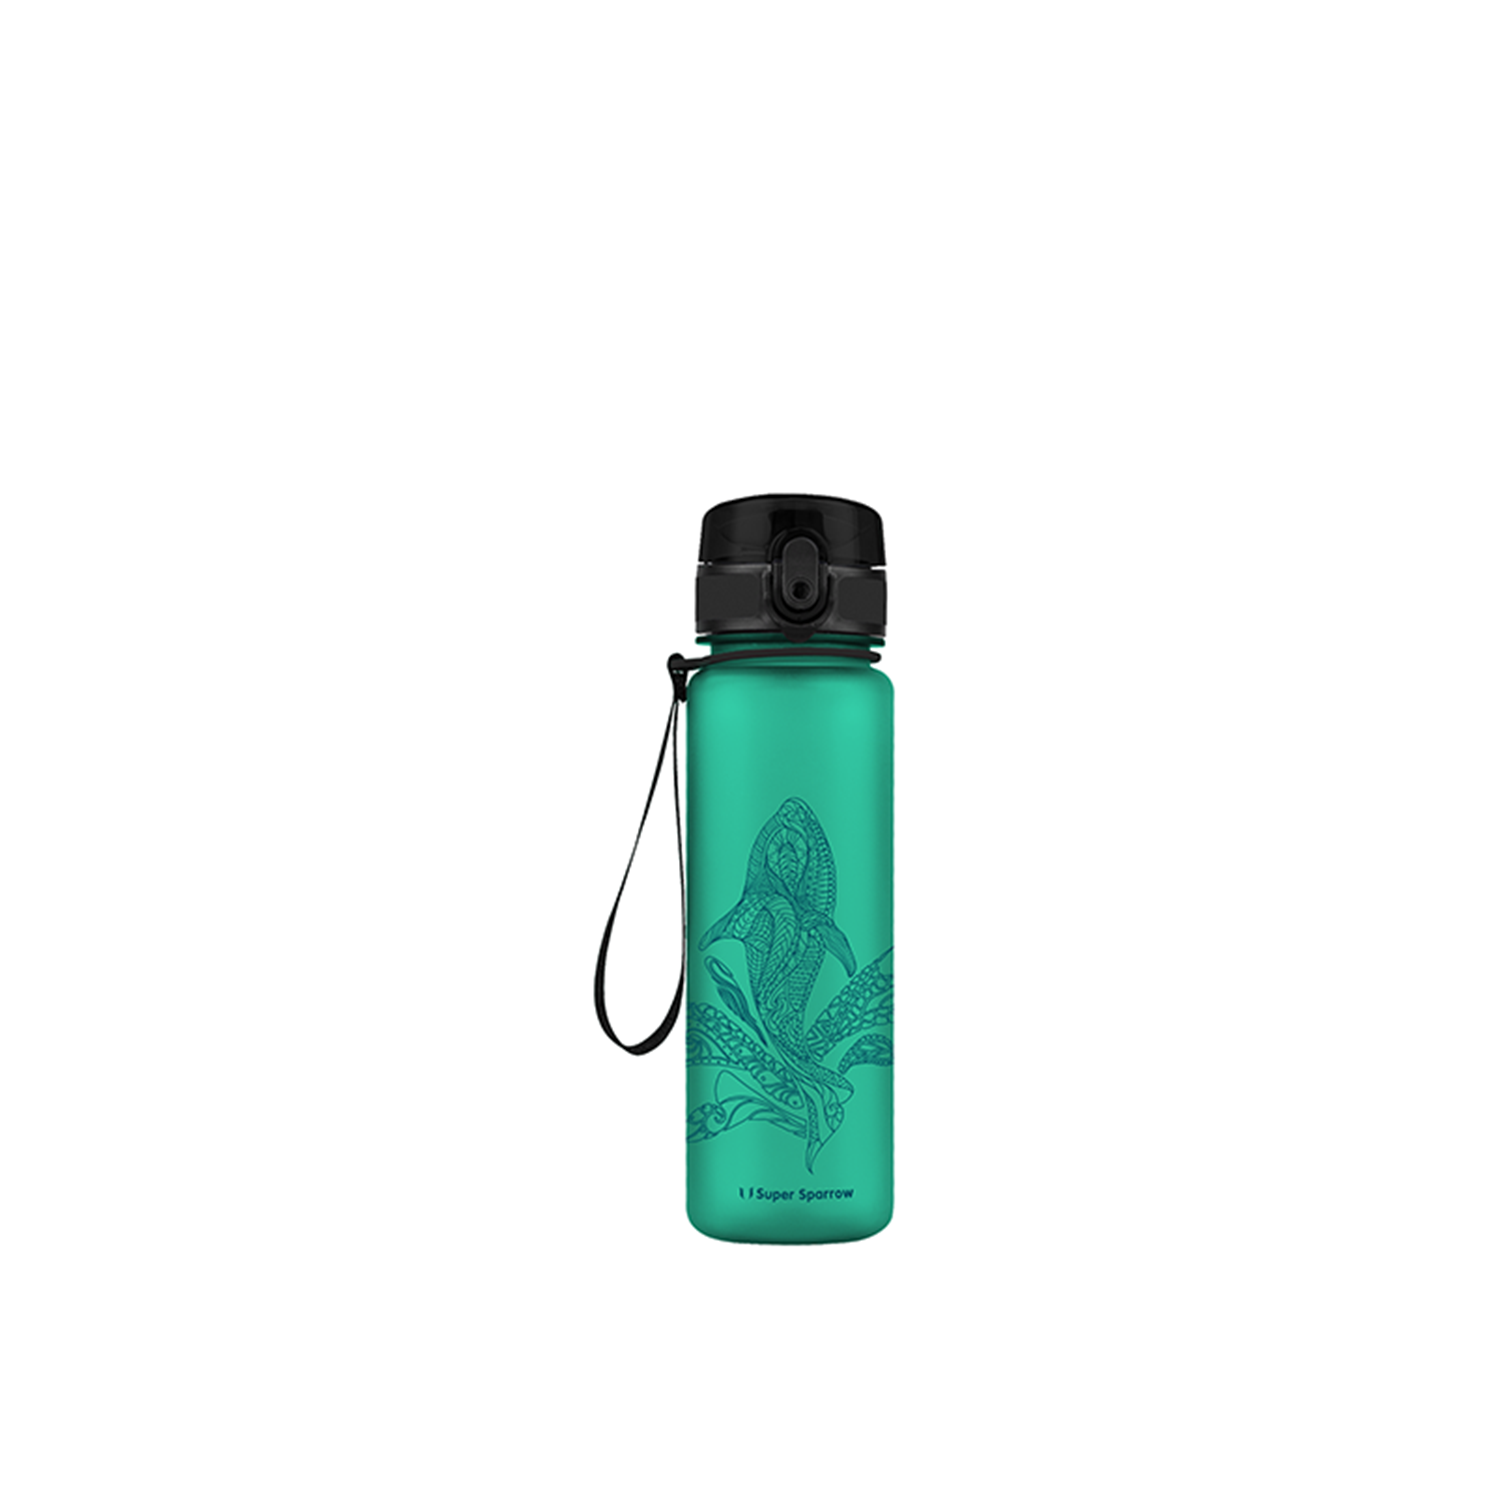  Super Sparrow｜BERLIN-MARATHON Customized Version Water Bottle  Stainless Steel 18/10 - Ultralight Travel Mug, Insulated Metal Water Bottle  17oz, BPA Free & Leak Proof Drinks Bottle : Sports & Outdoors